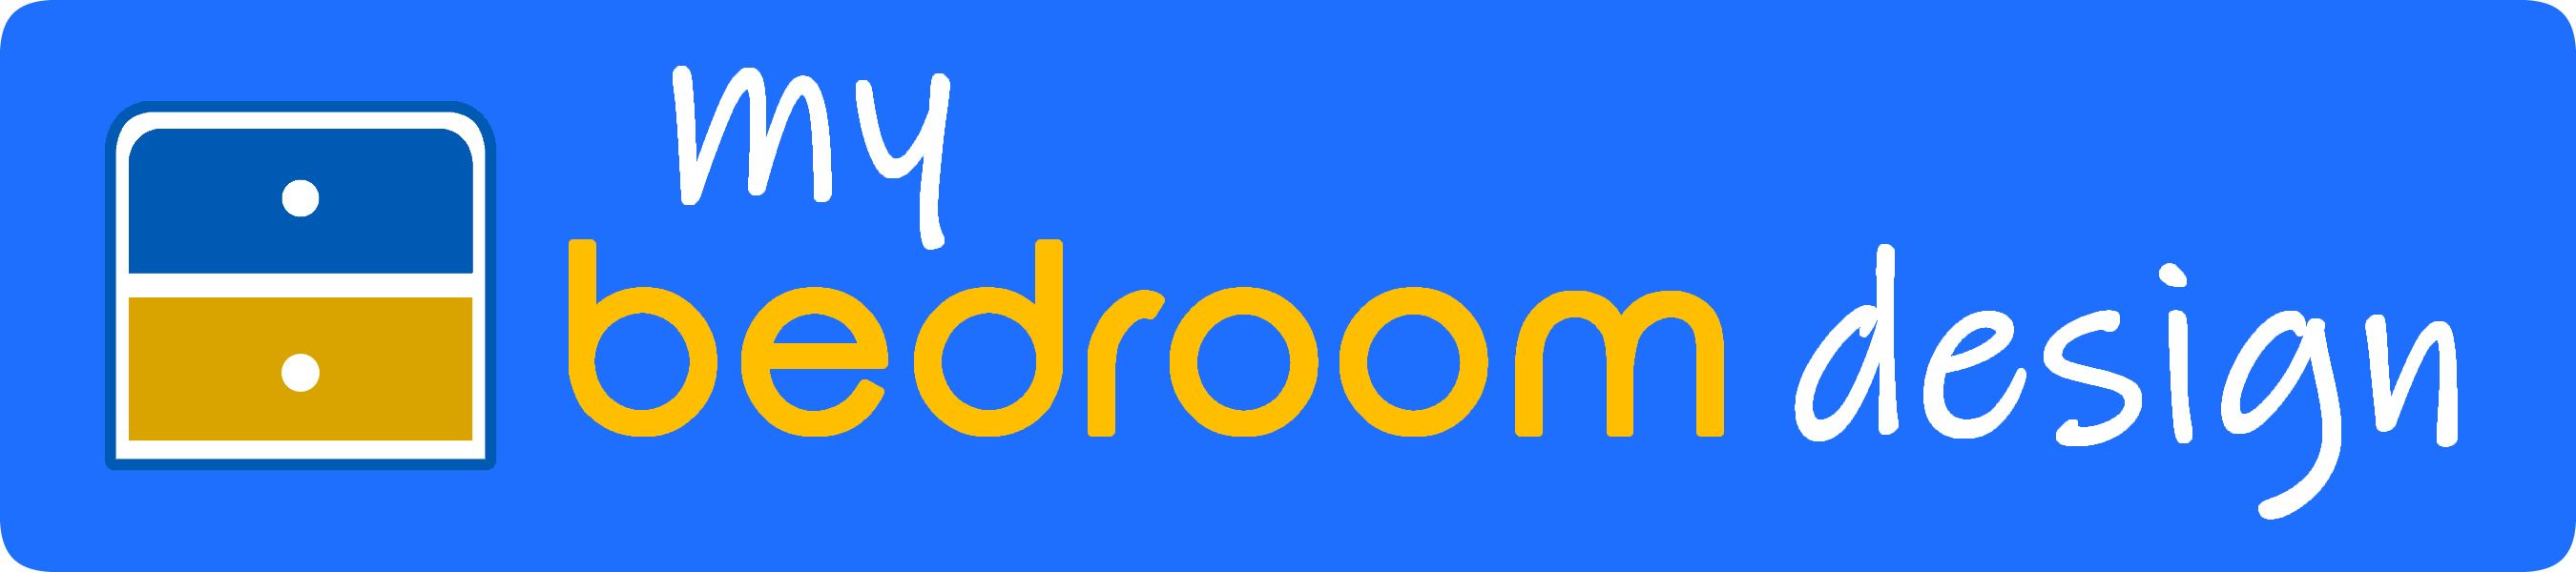 my bedroom design ltd Logo